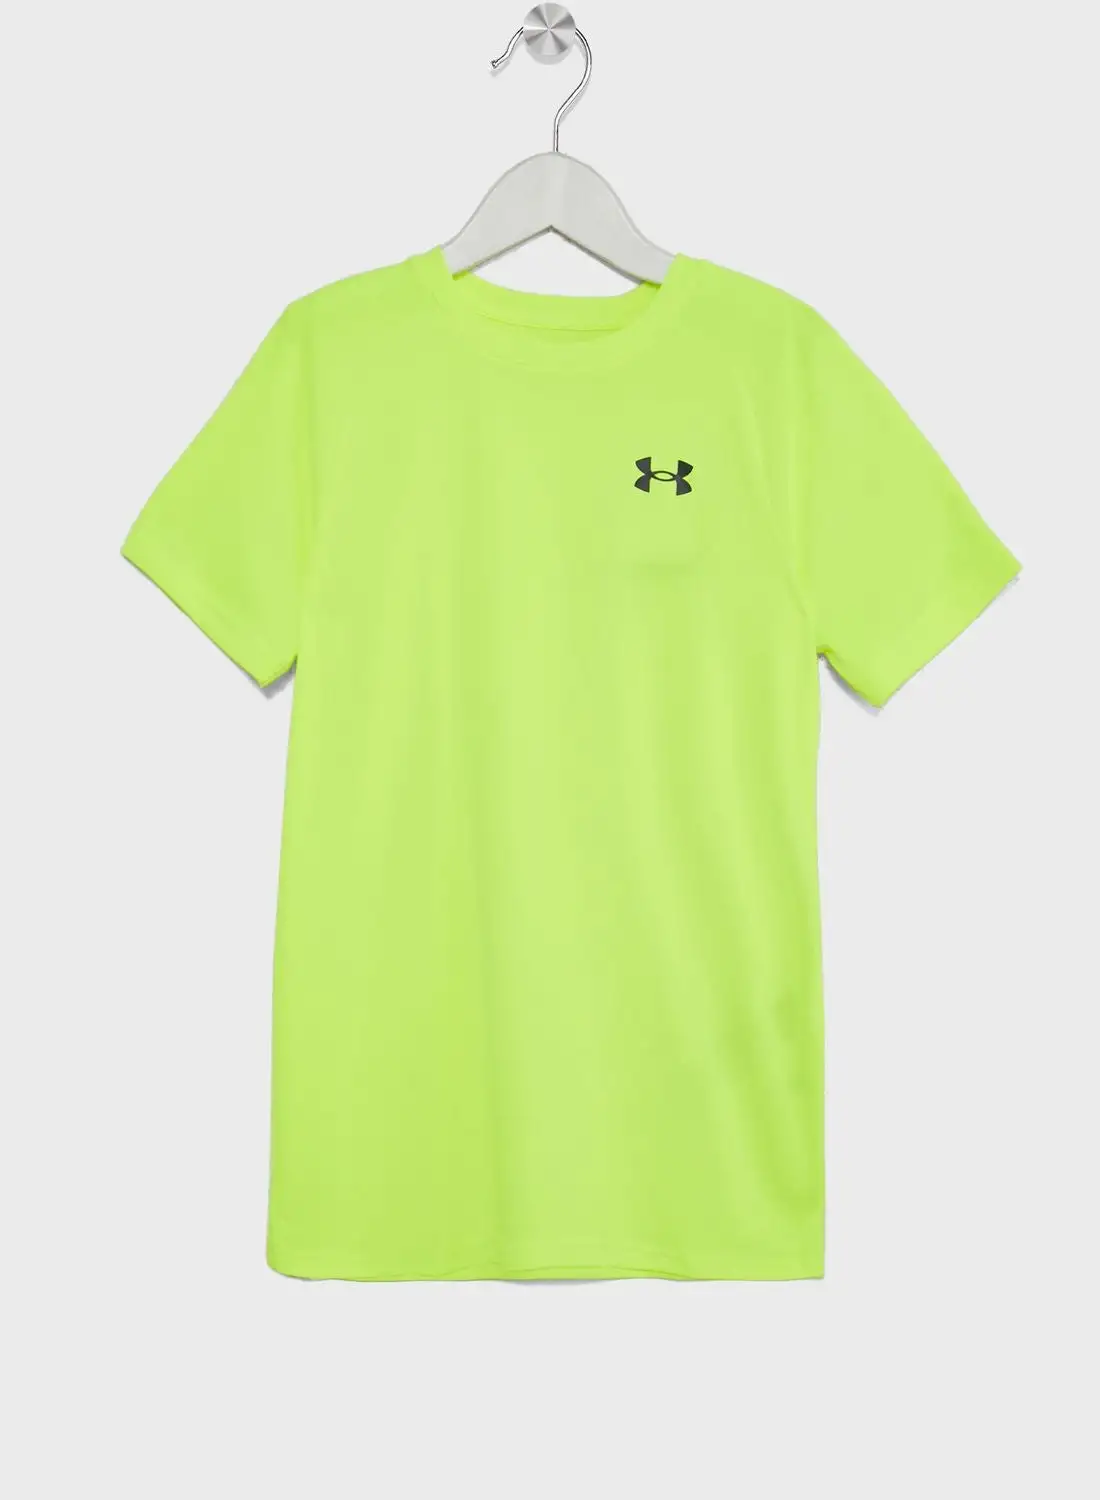 UNDER ARMOUR Boys' Tech 2.0 Short Sleeve T-shirt